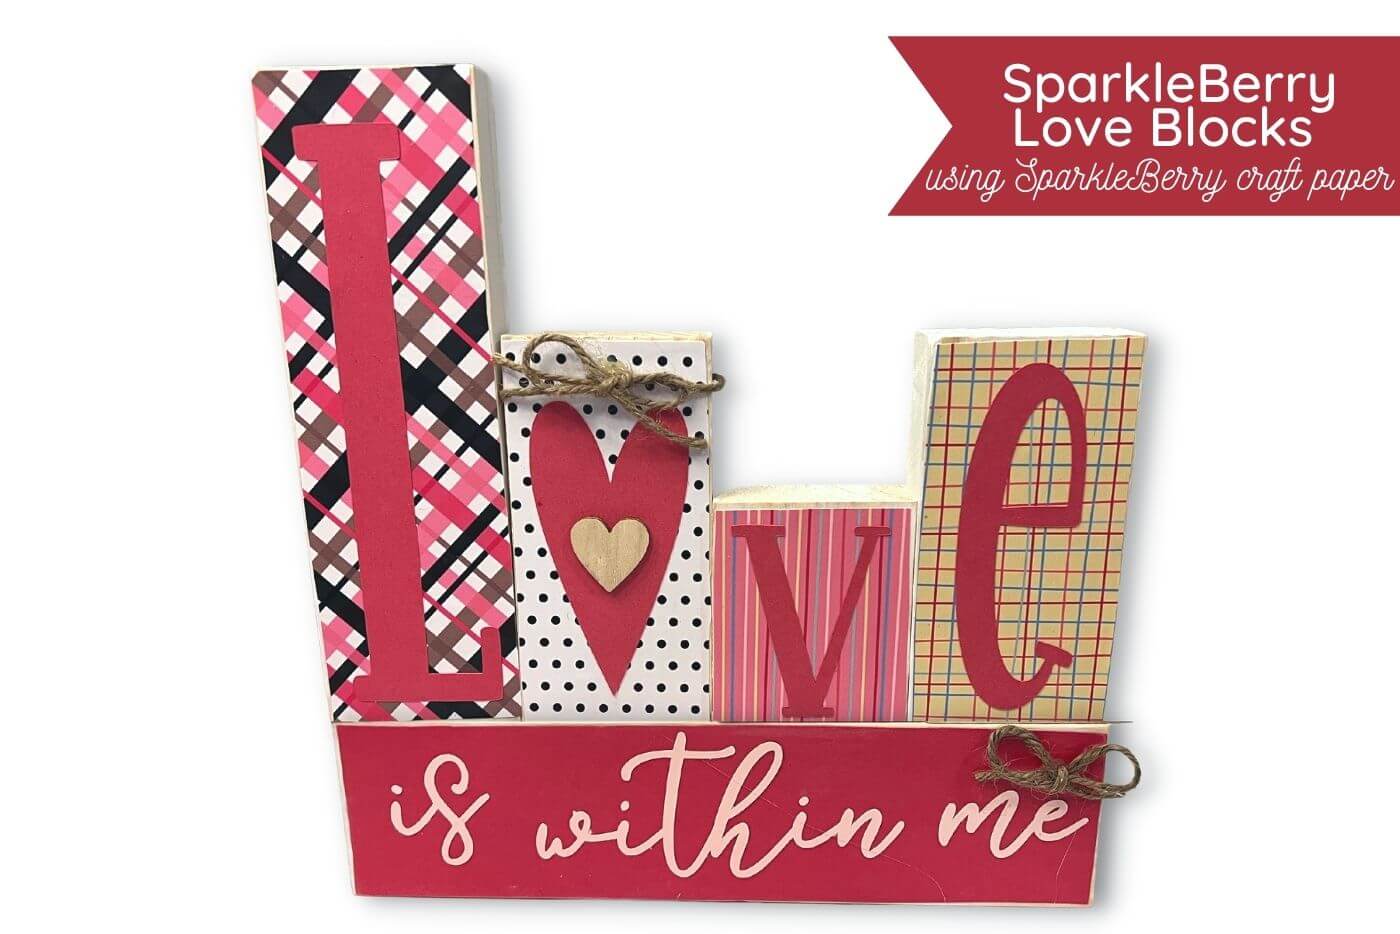 Love Blocks with SparkleBerry Craft Paper